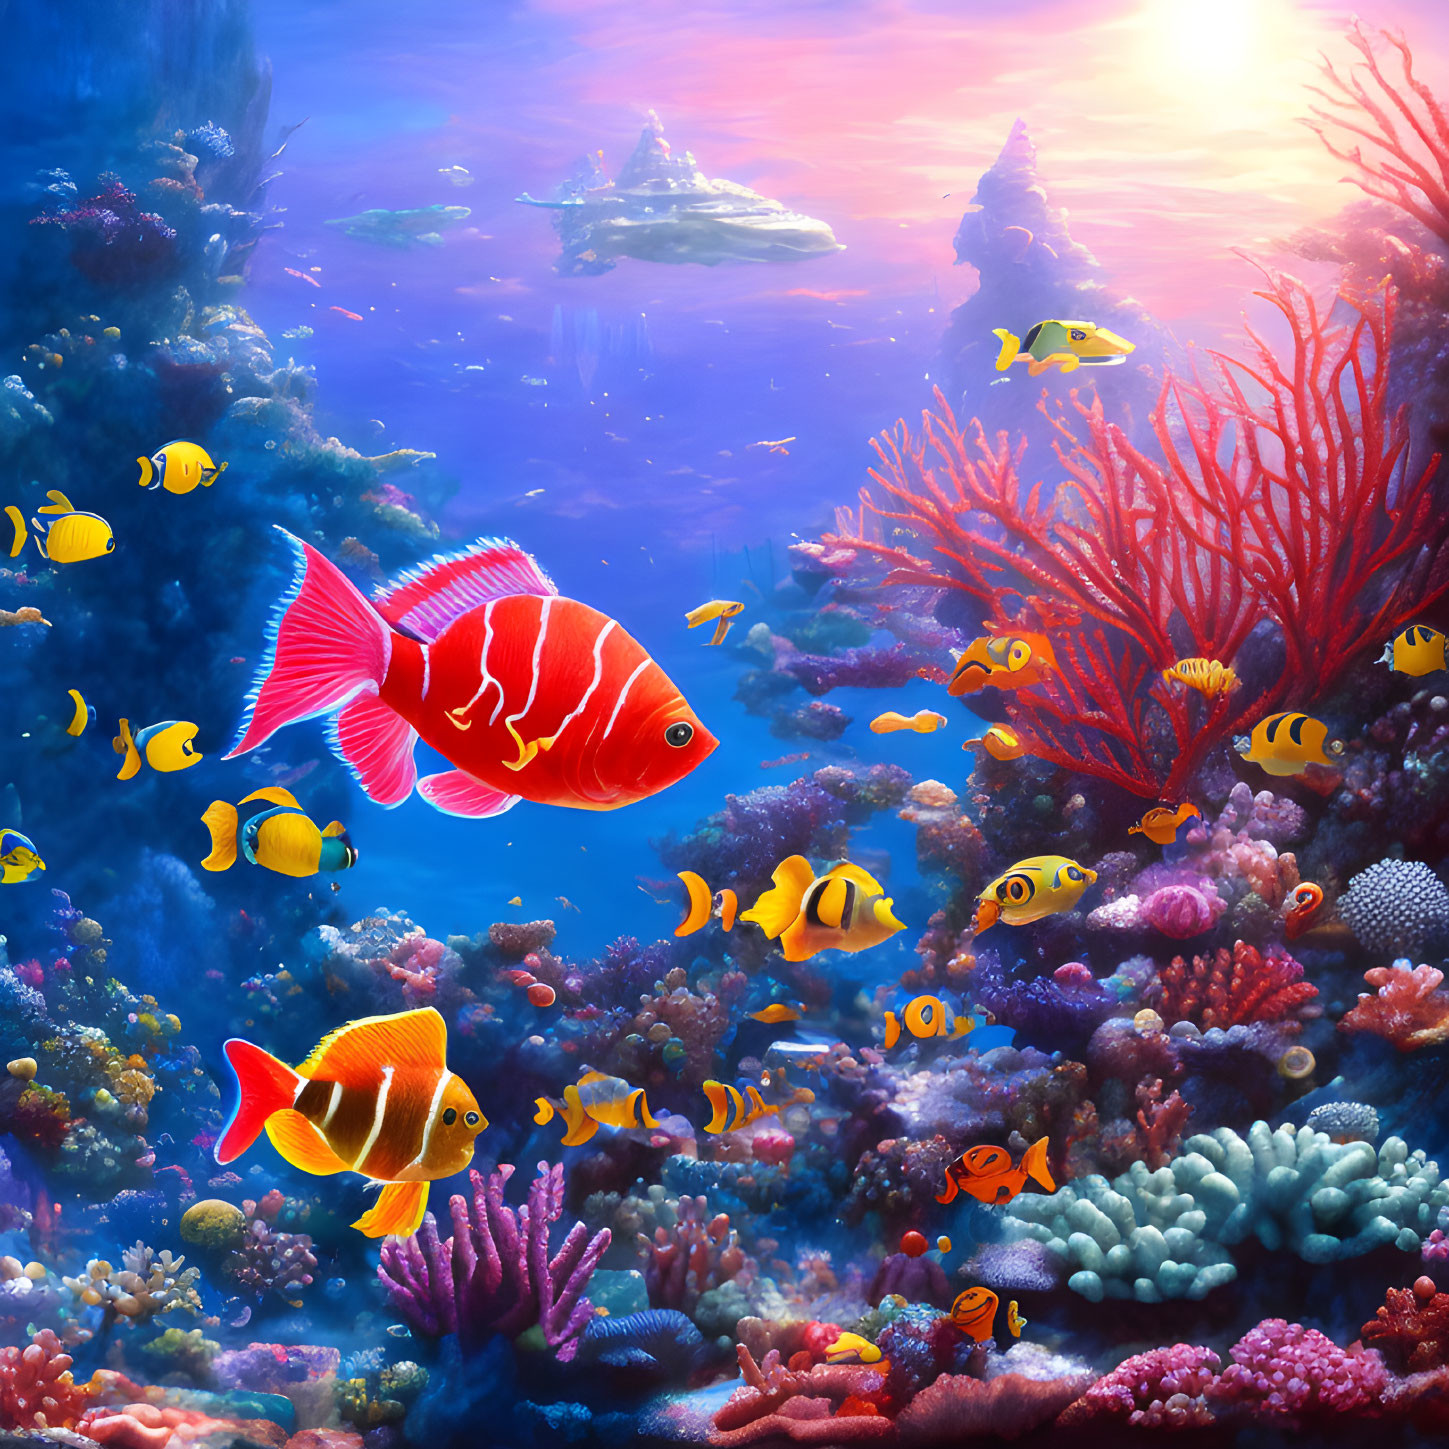 Colorful Fish and Corals in Vibrant Underwater Scene